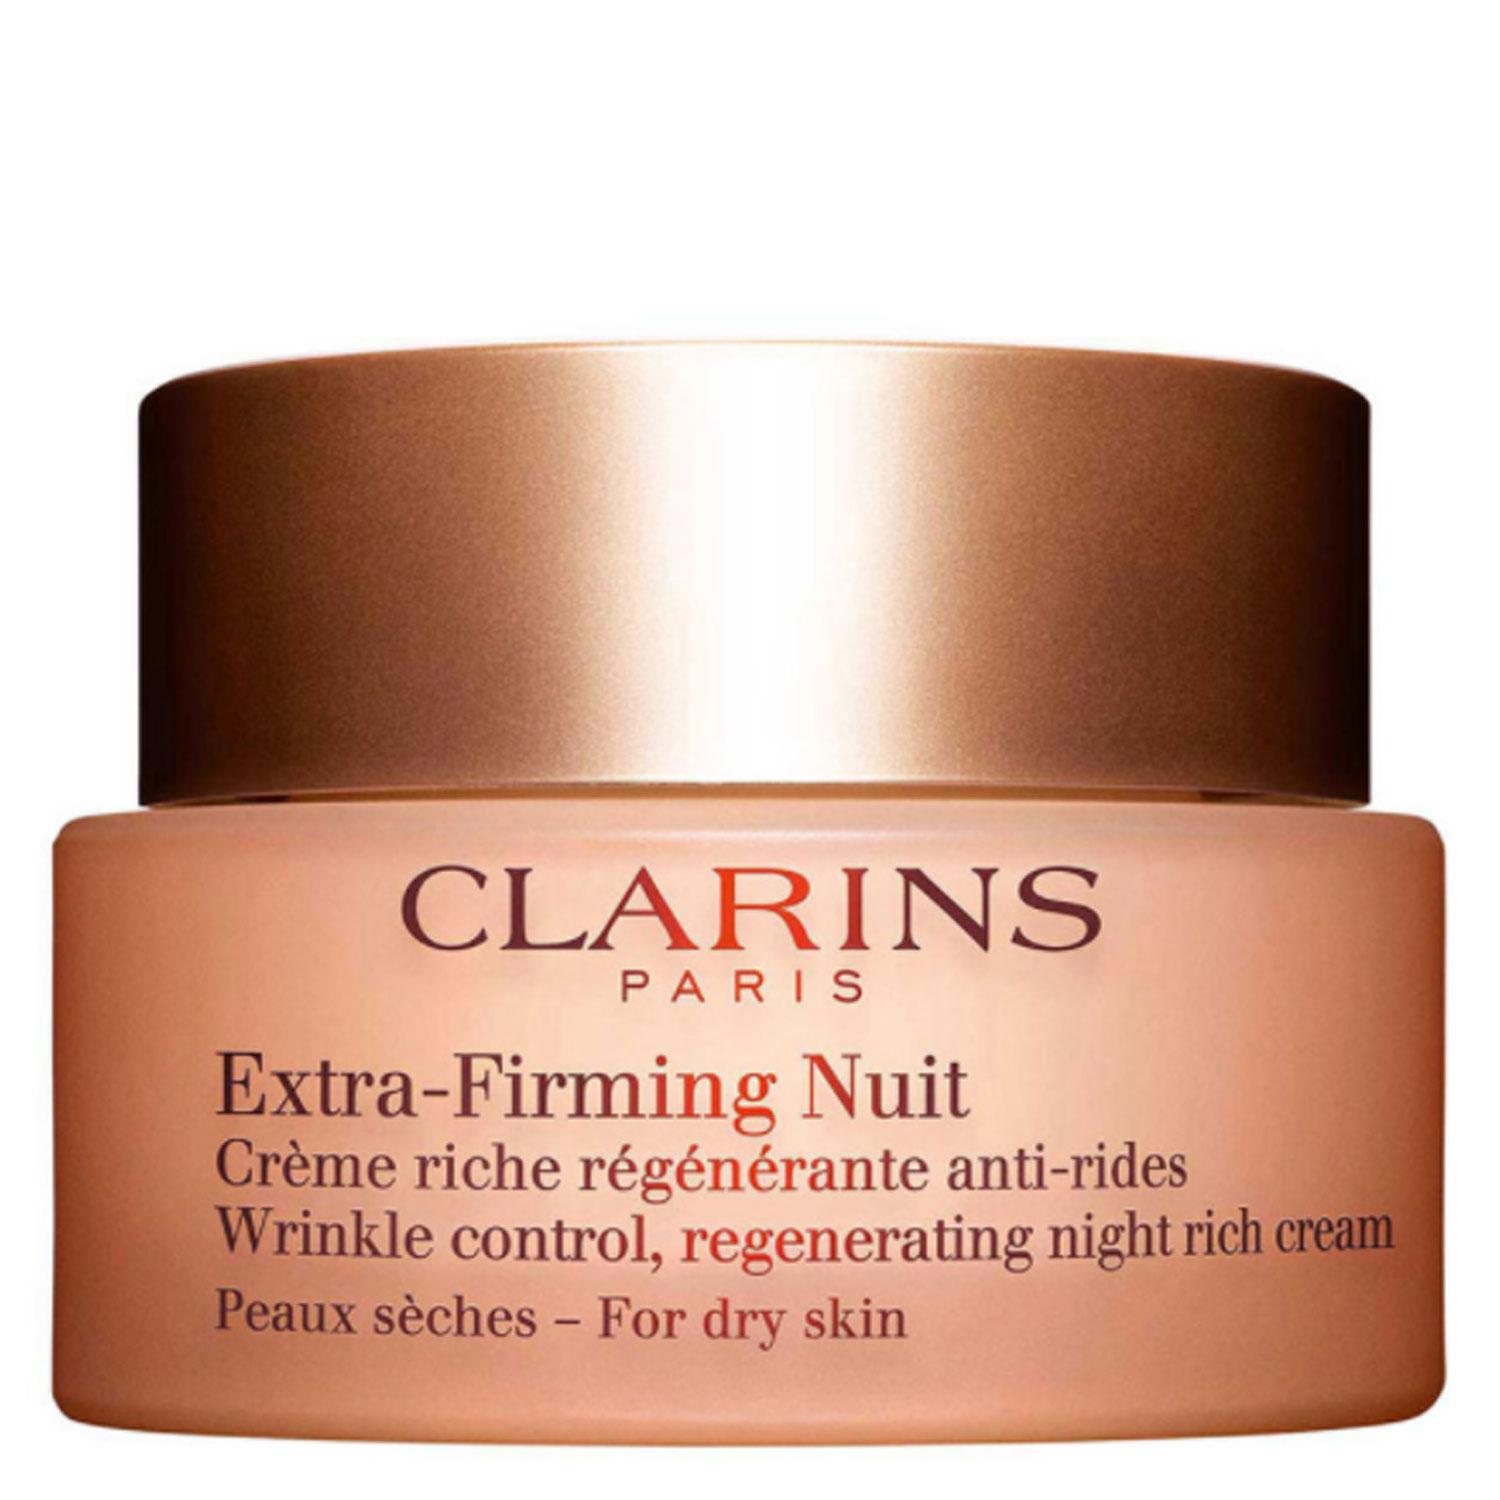 Extra Firming - Regenerating Wrinkle Control Night Rich Cream